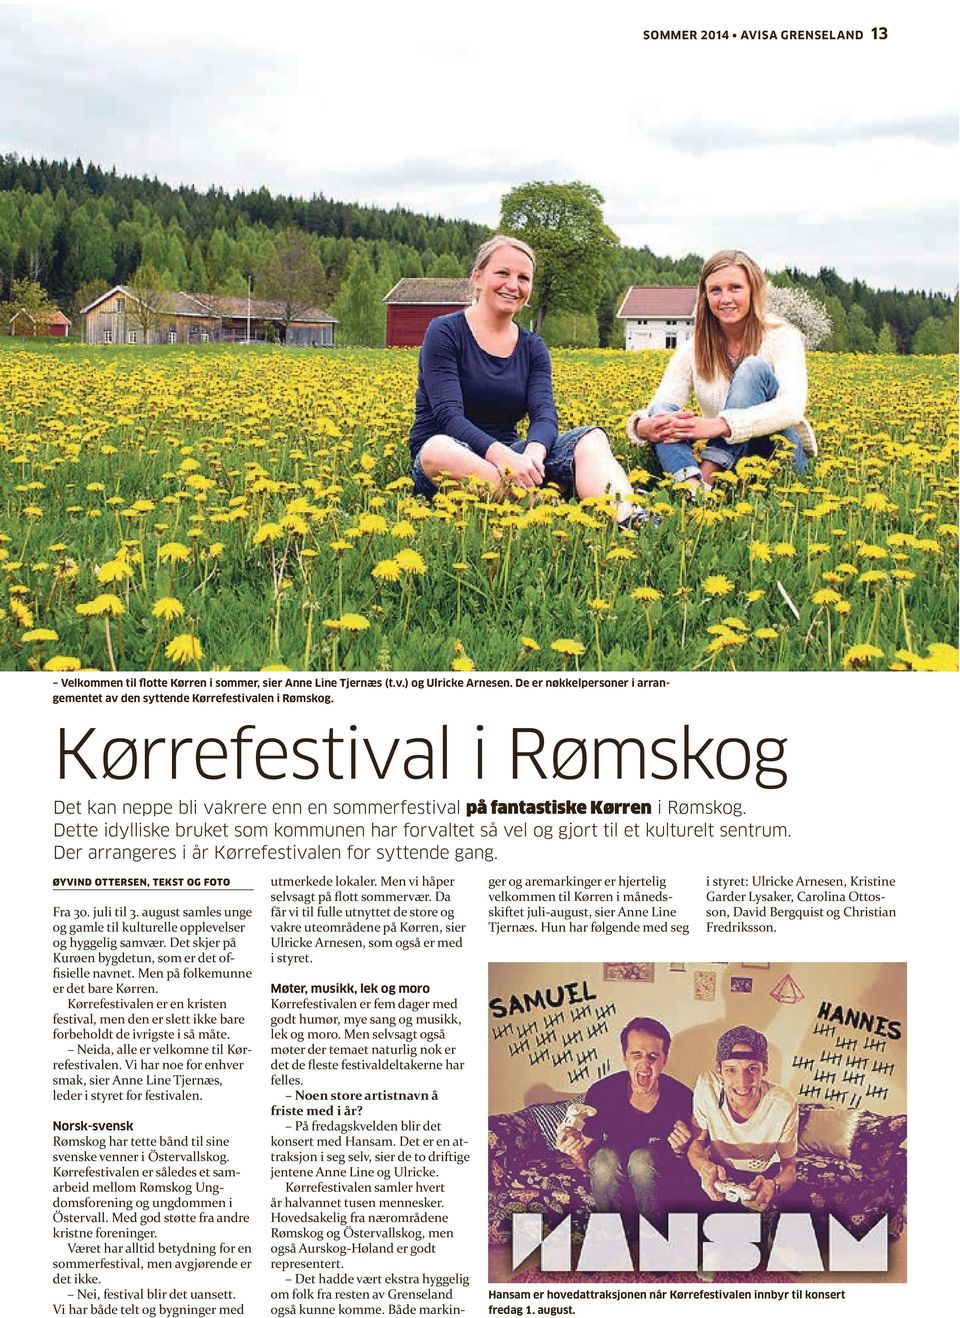 Der arrangeres i år Kørrefestivalen for syttende gang. ØYVIND OTTERSEN, TEKST OG FOTO Fra 30. juli til 3. august samles unge og gamle til kulturelle opplevelser og hyggelig samvær.